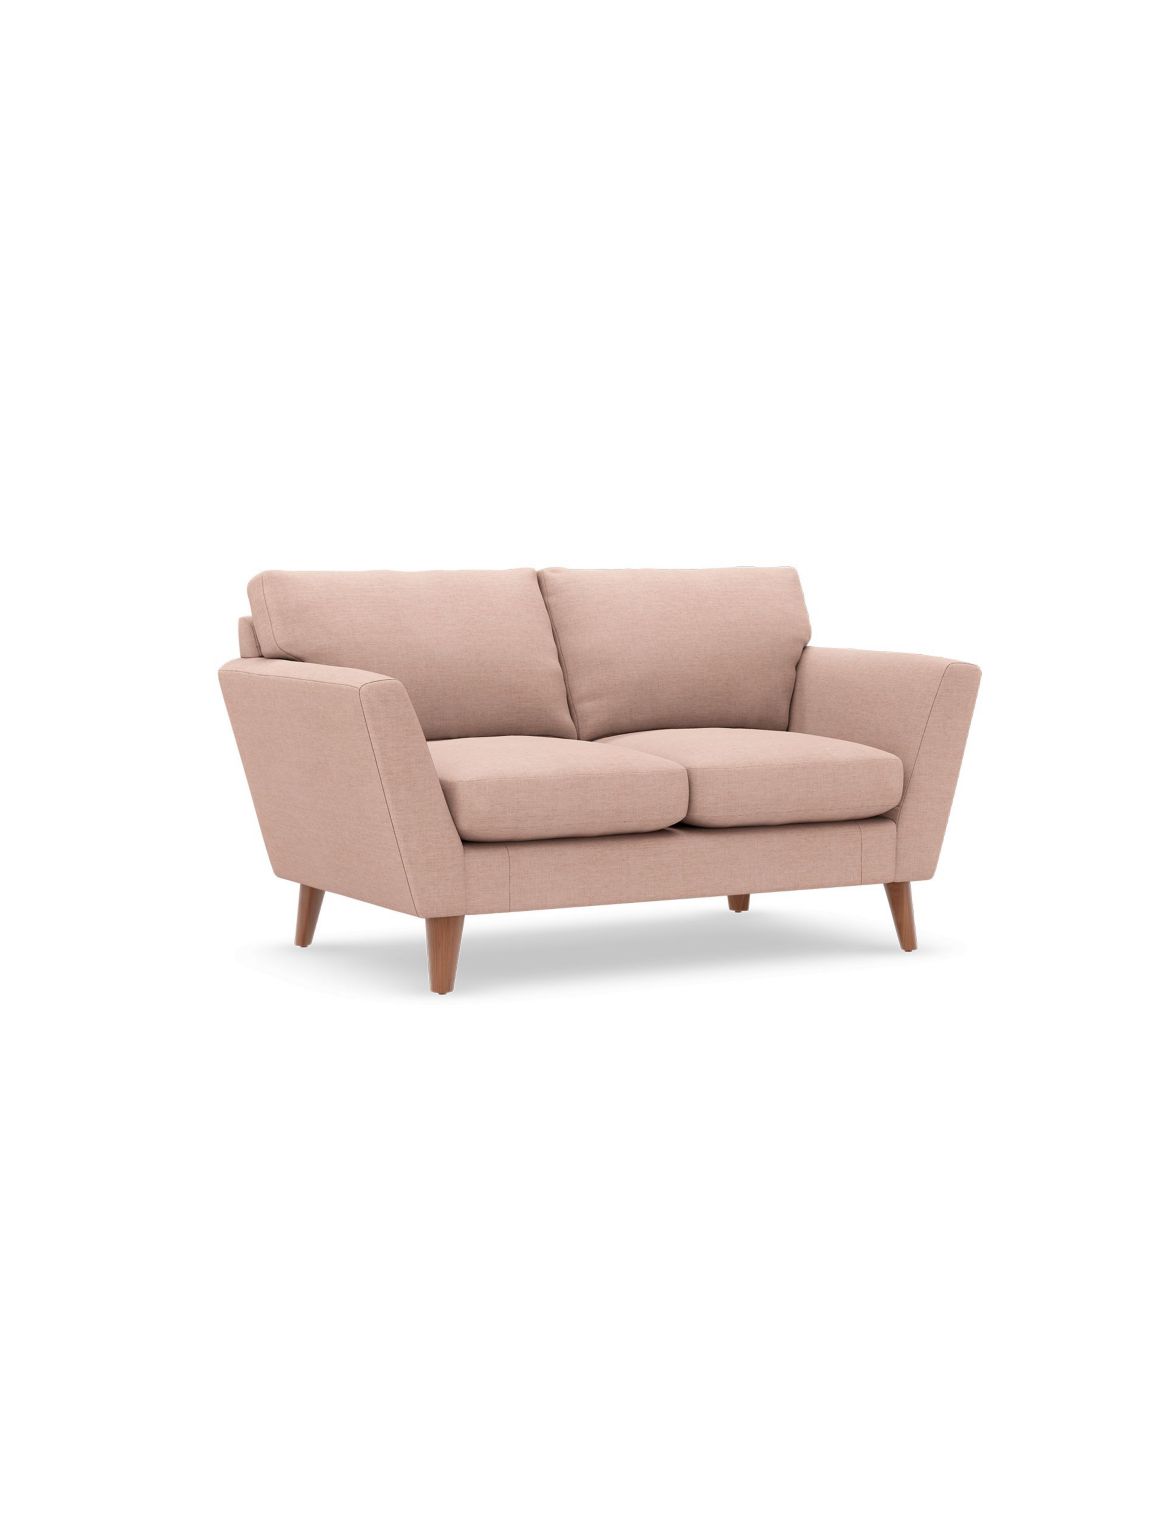 Foxbury Small Sofa pink